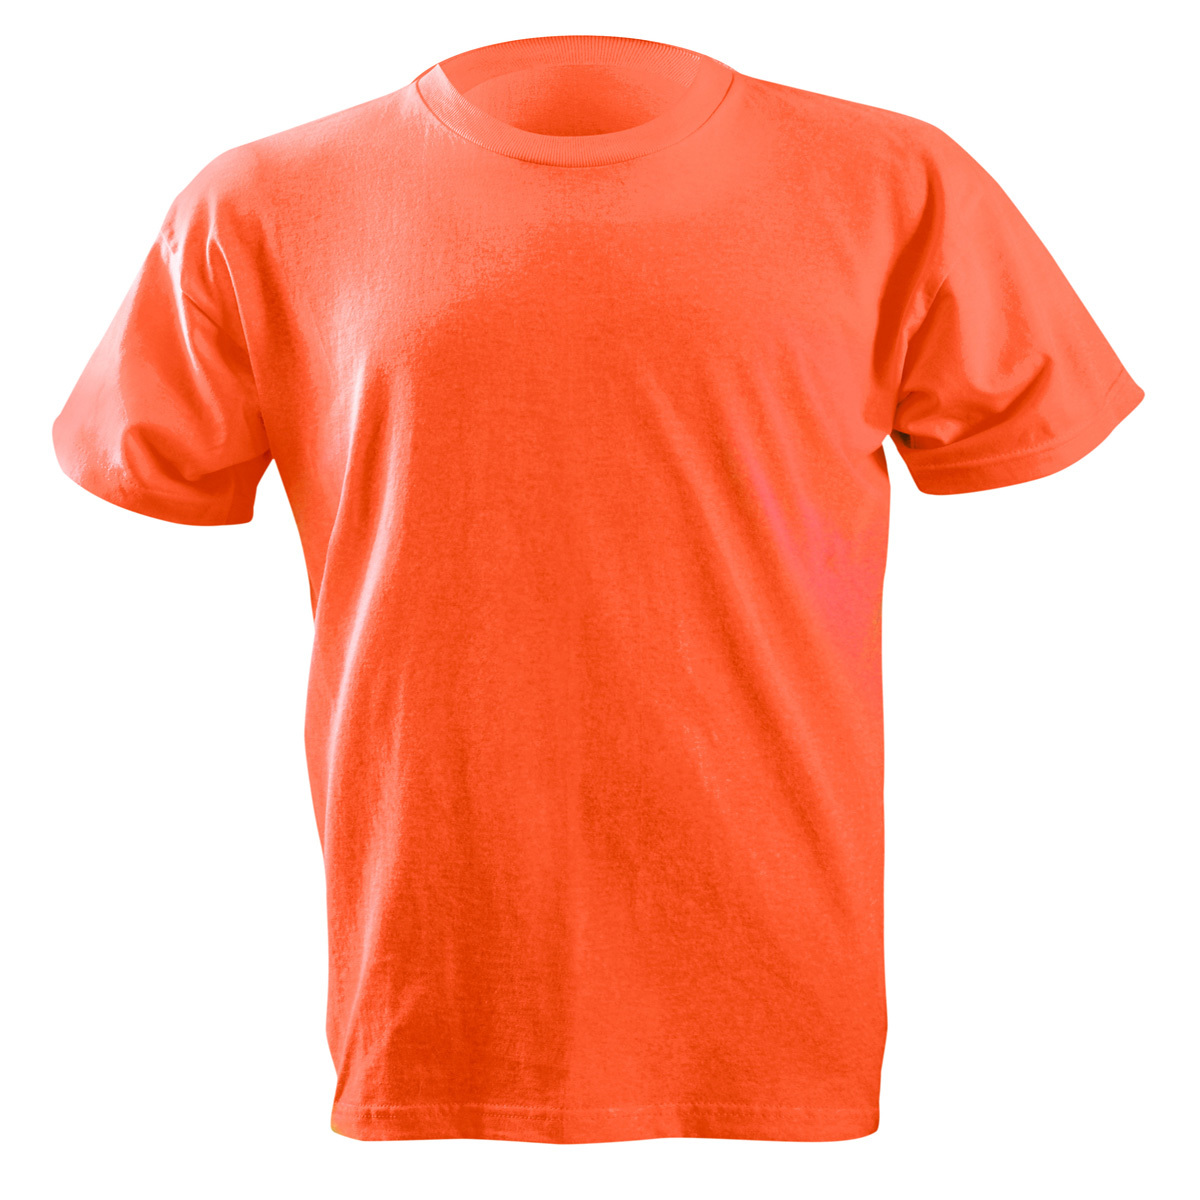 OccuNomix Small Orange 6 Ounce Cotton T-Shirt